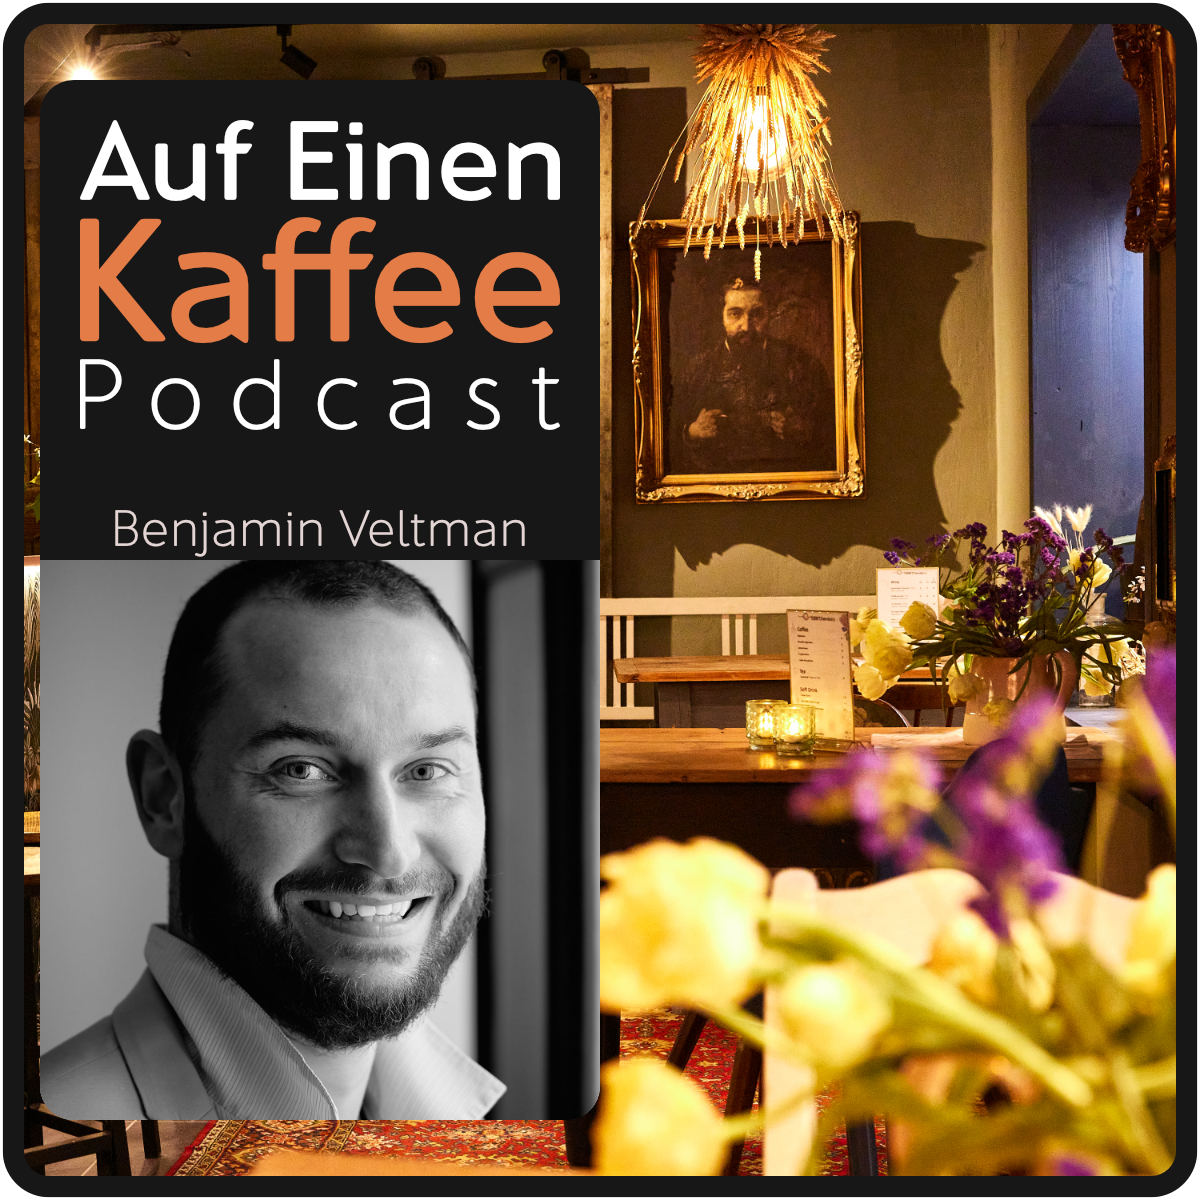 Cover-Cafe013-Benjamin-Veltman-Table-Chemistry-AufEinenKaffee-Podcast